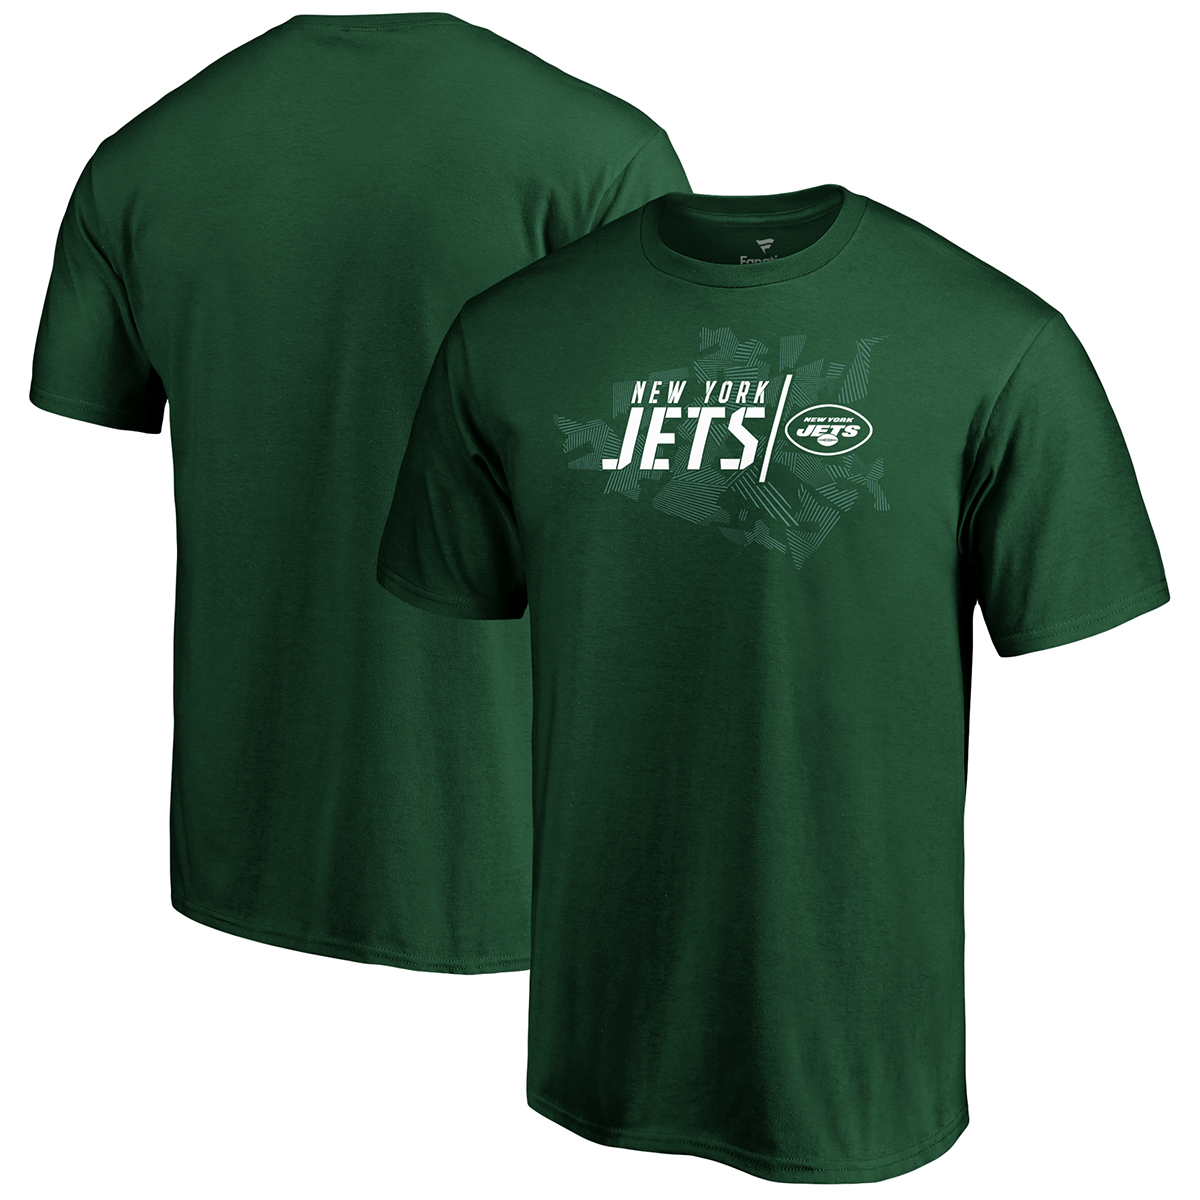 New York Jets Men's Geo Drift Short-Sleeve Tee - Green, M